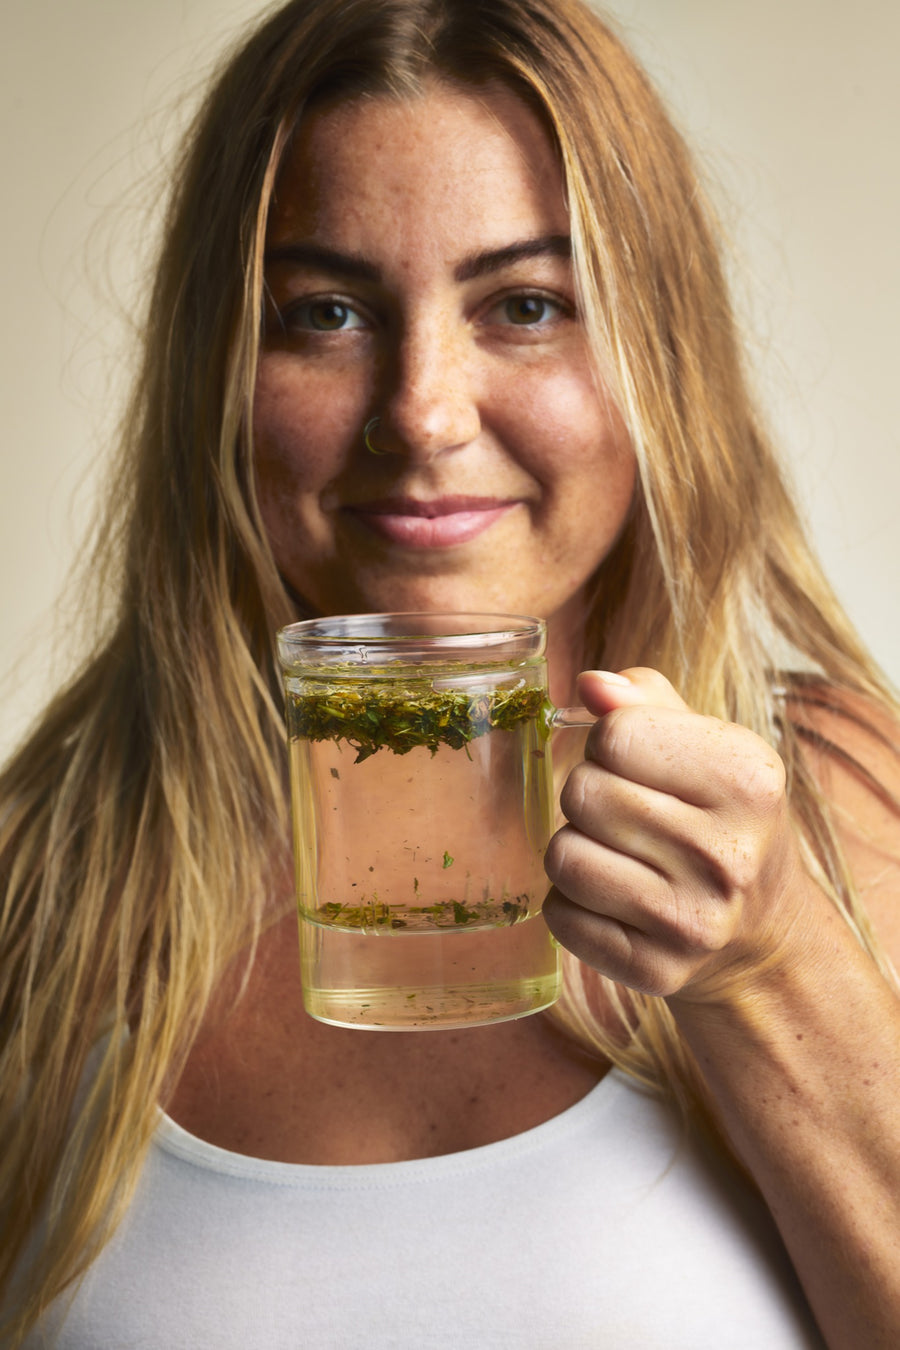 Restorative Blend | Organic Herbal Tea 4 oz